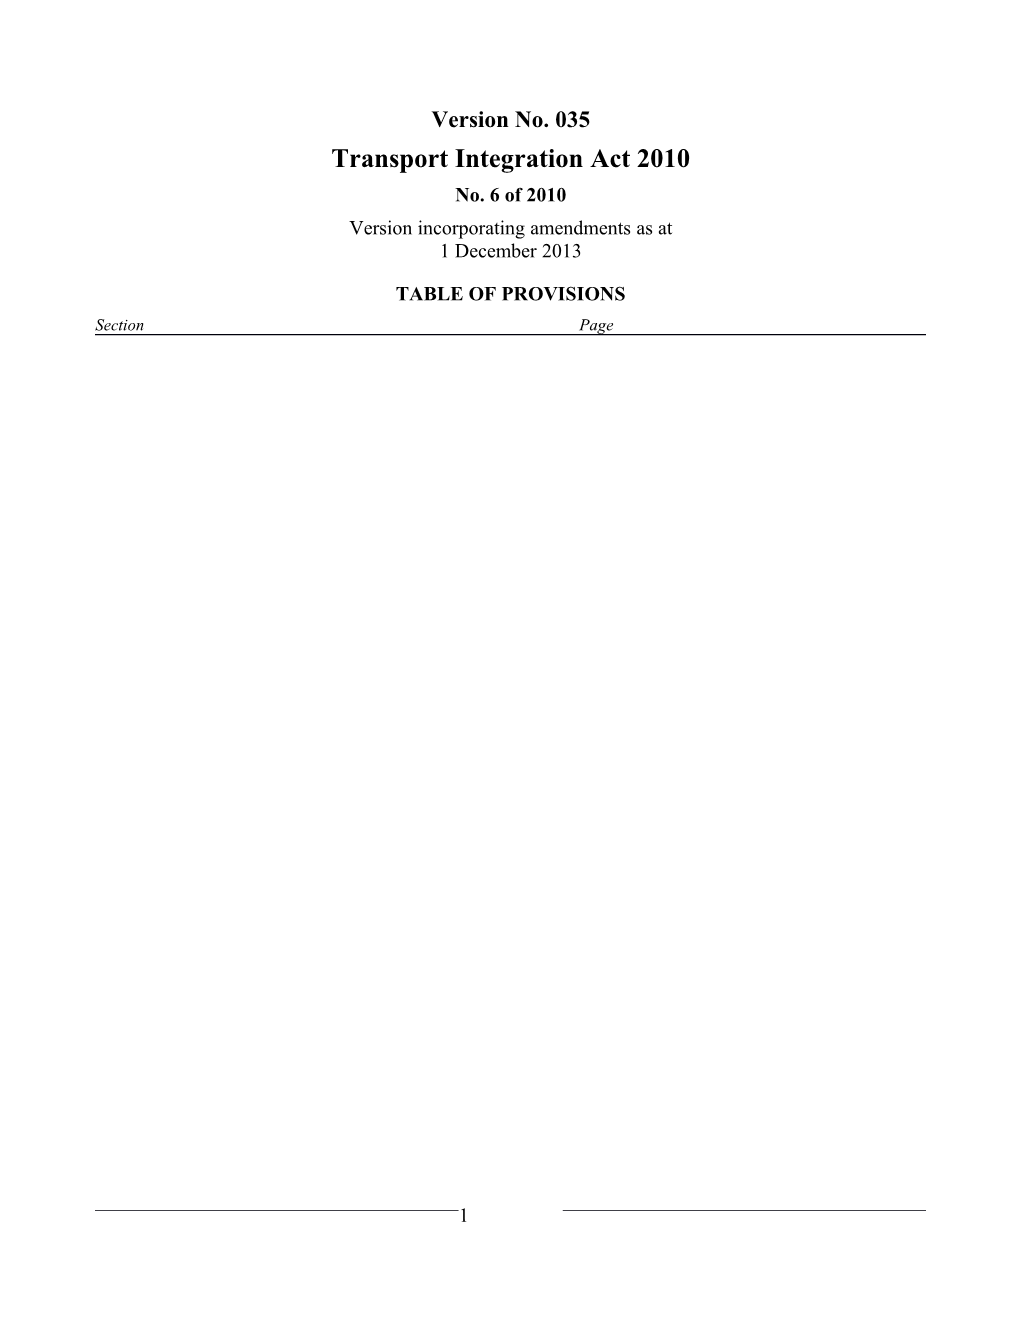 Transport Integration Act 2010